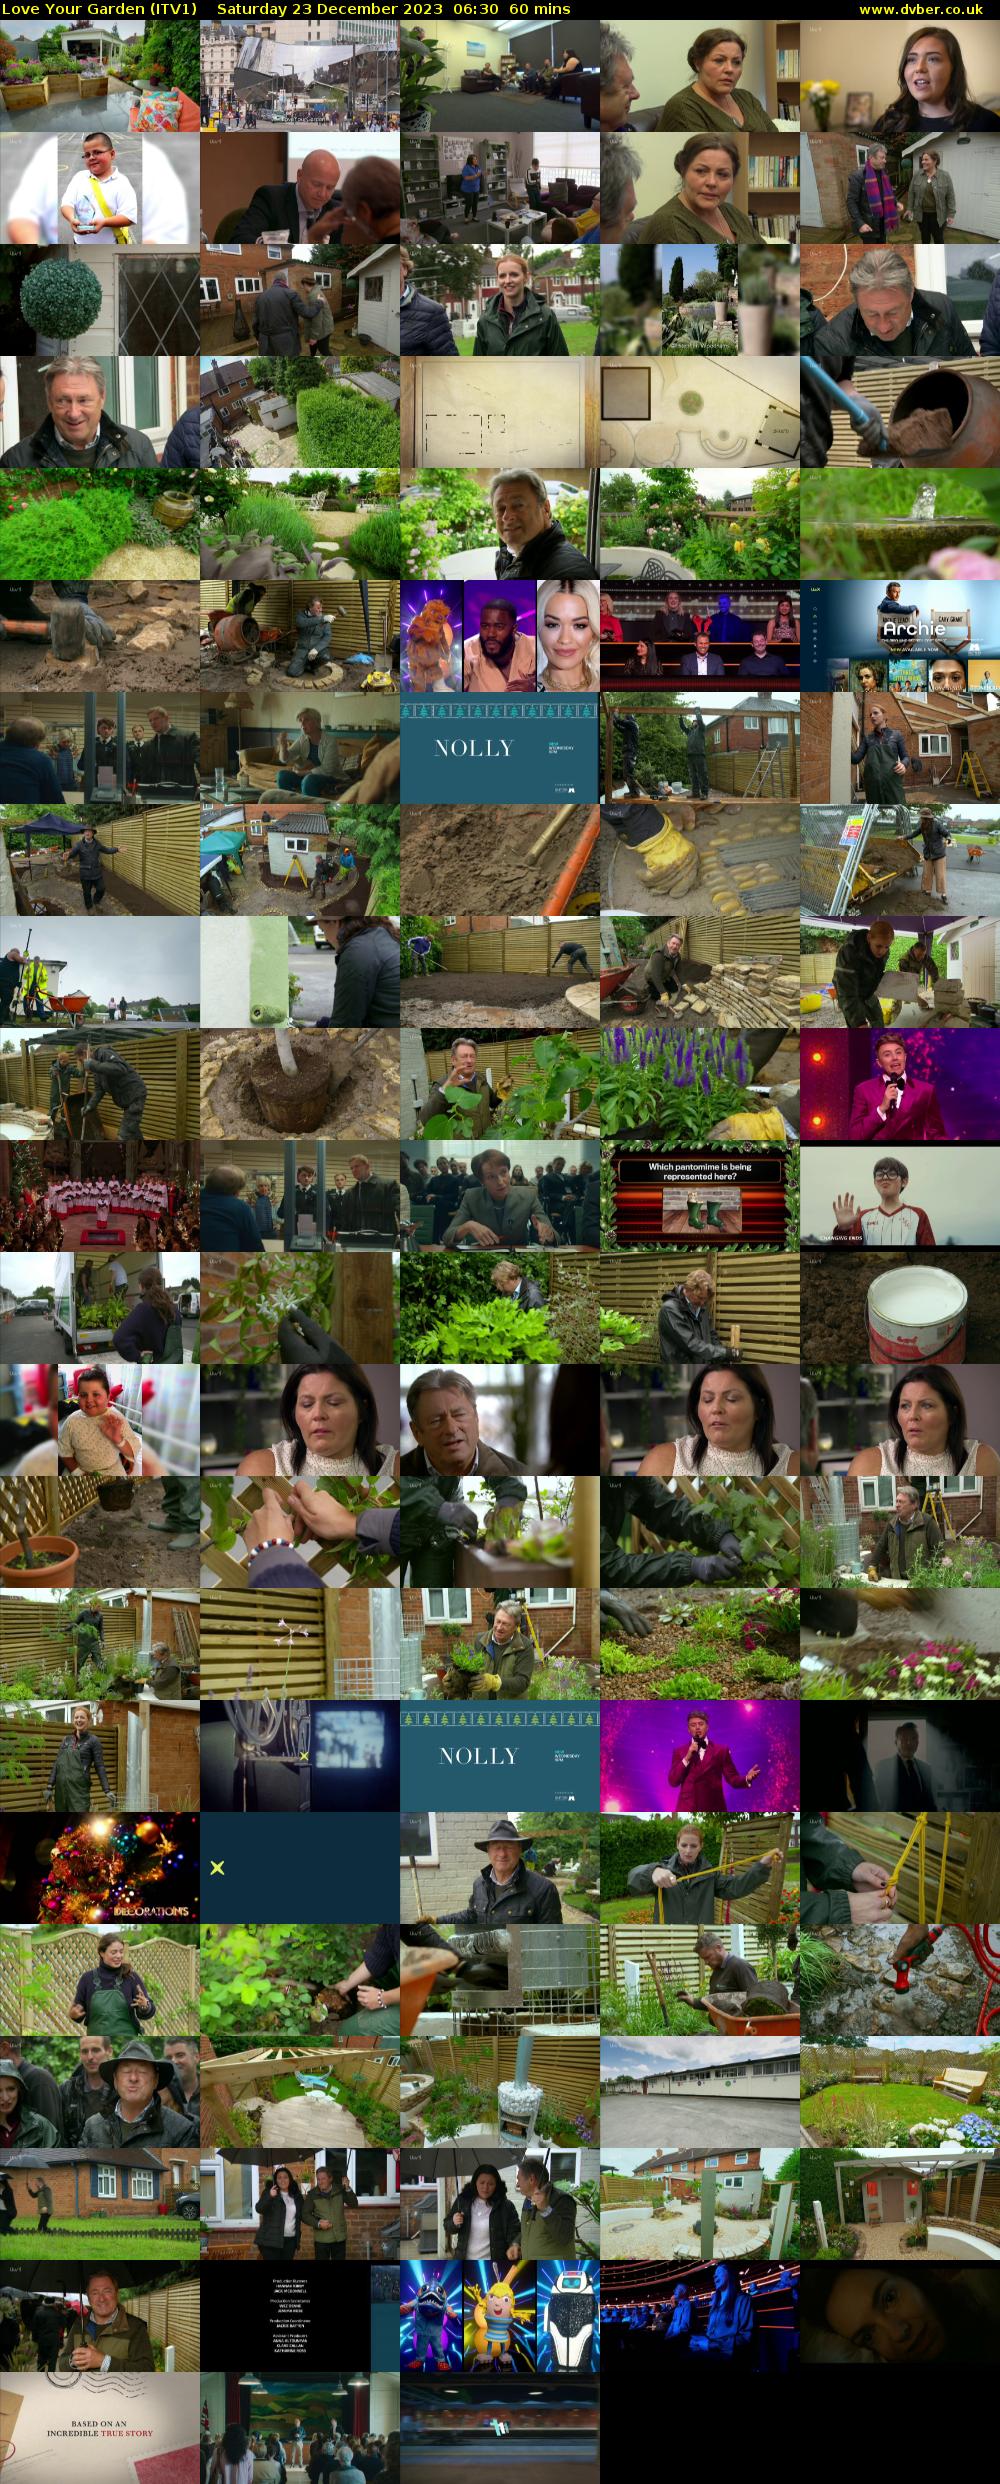 Love Your Garden (ITV1) Saturday 23 December 2023 06:30 - 07:30